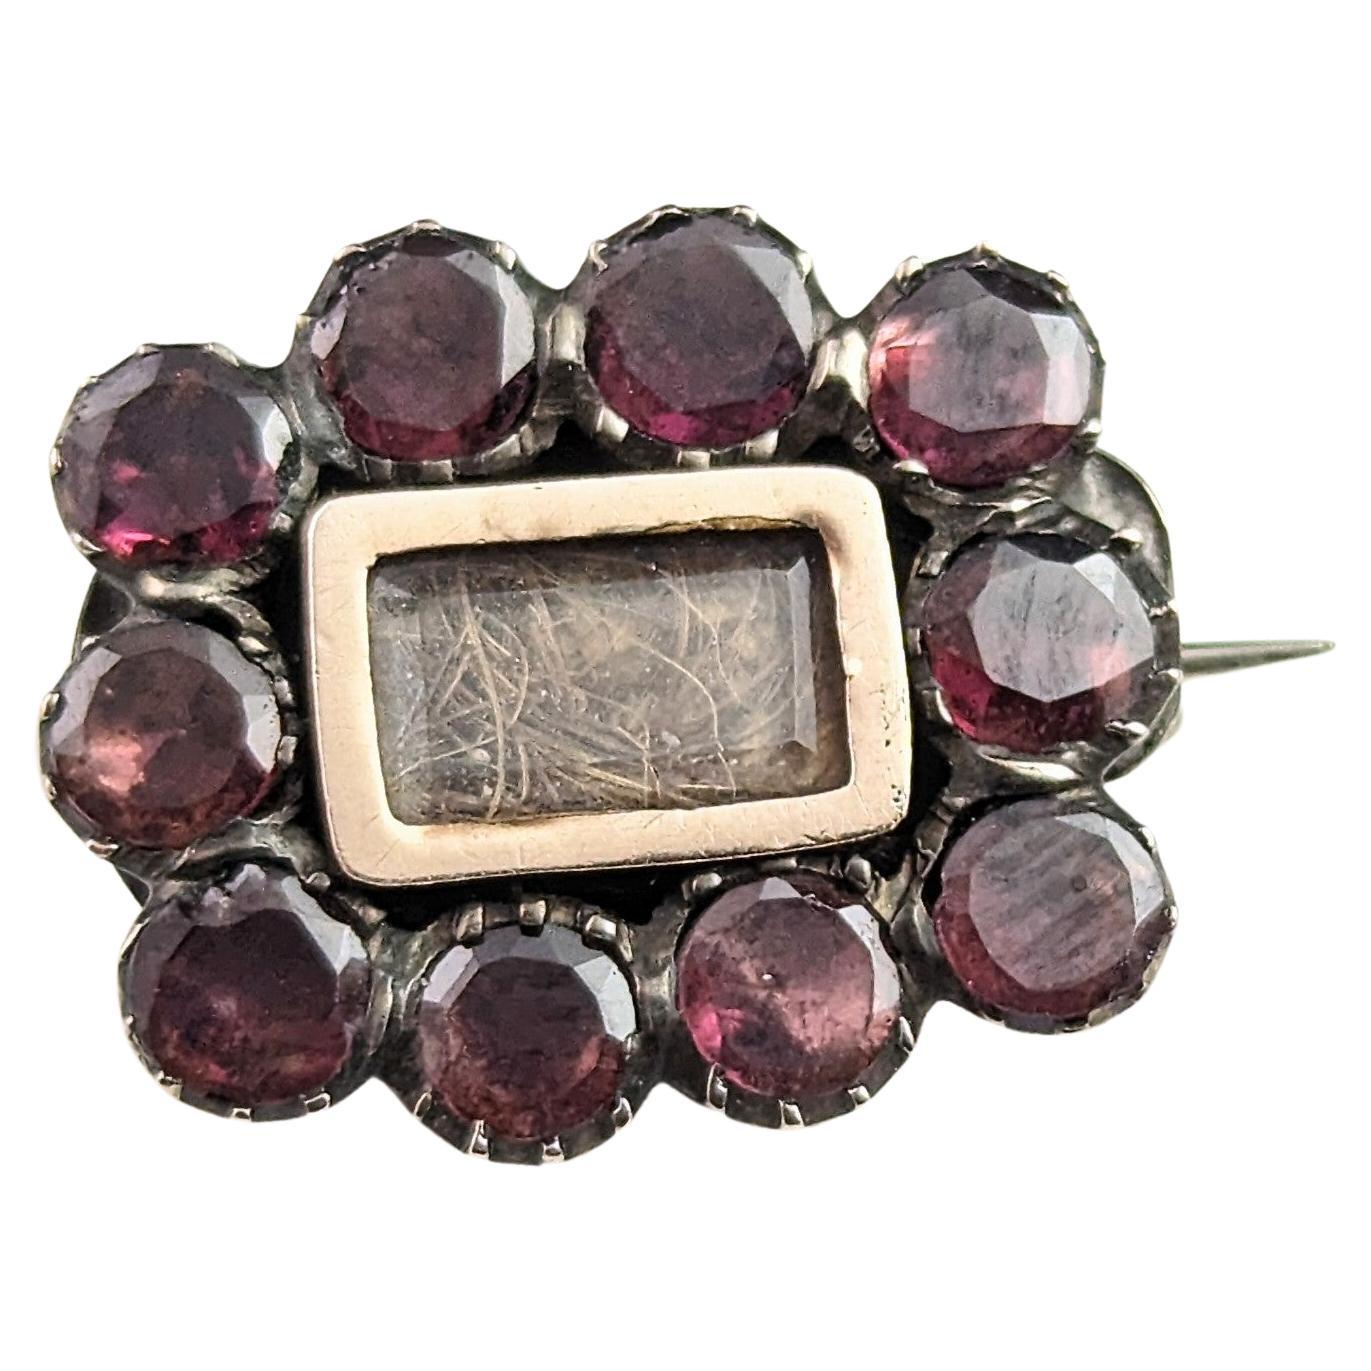 Antique Georgian Mourning brooch, Flat cut Garnet, Lace pin